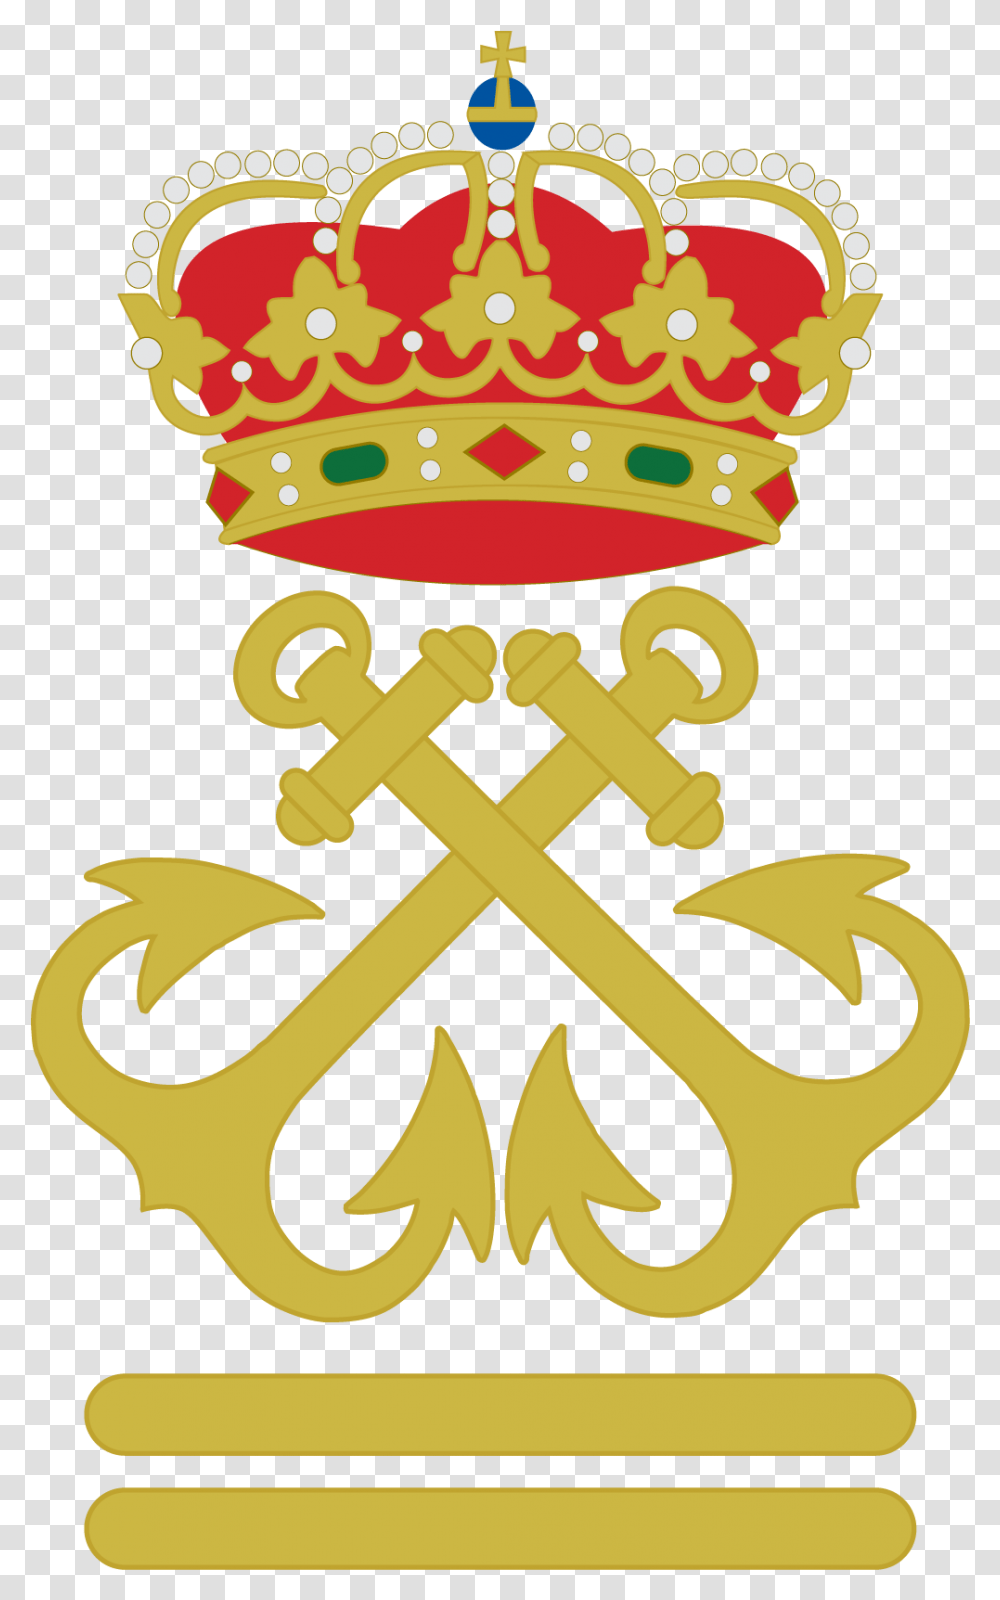 Filedistintivo De Patrn Yatepng Wikimedia Commons Spanish Heraldry Crown, Jewelry, Accessories, Accessory, Hook Transparent Png